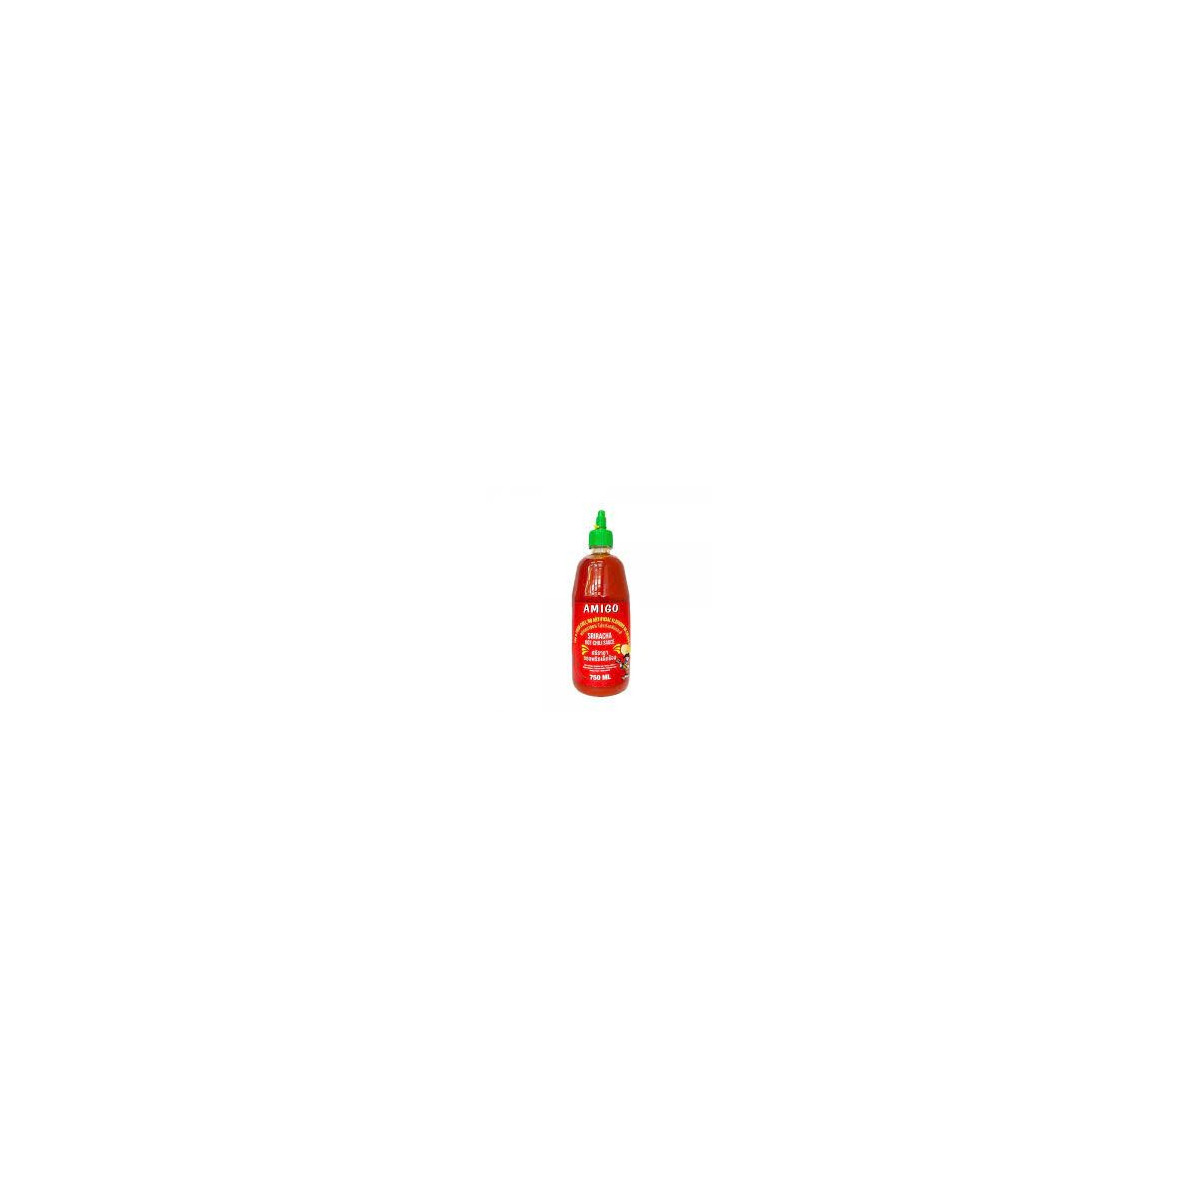 Sos Sriracha Amigo 750ml